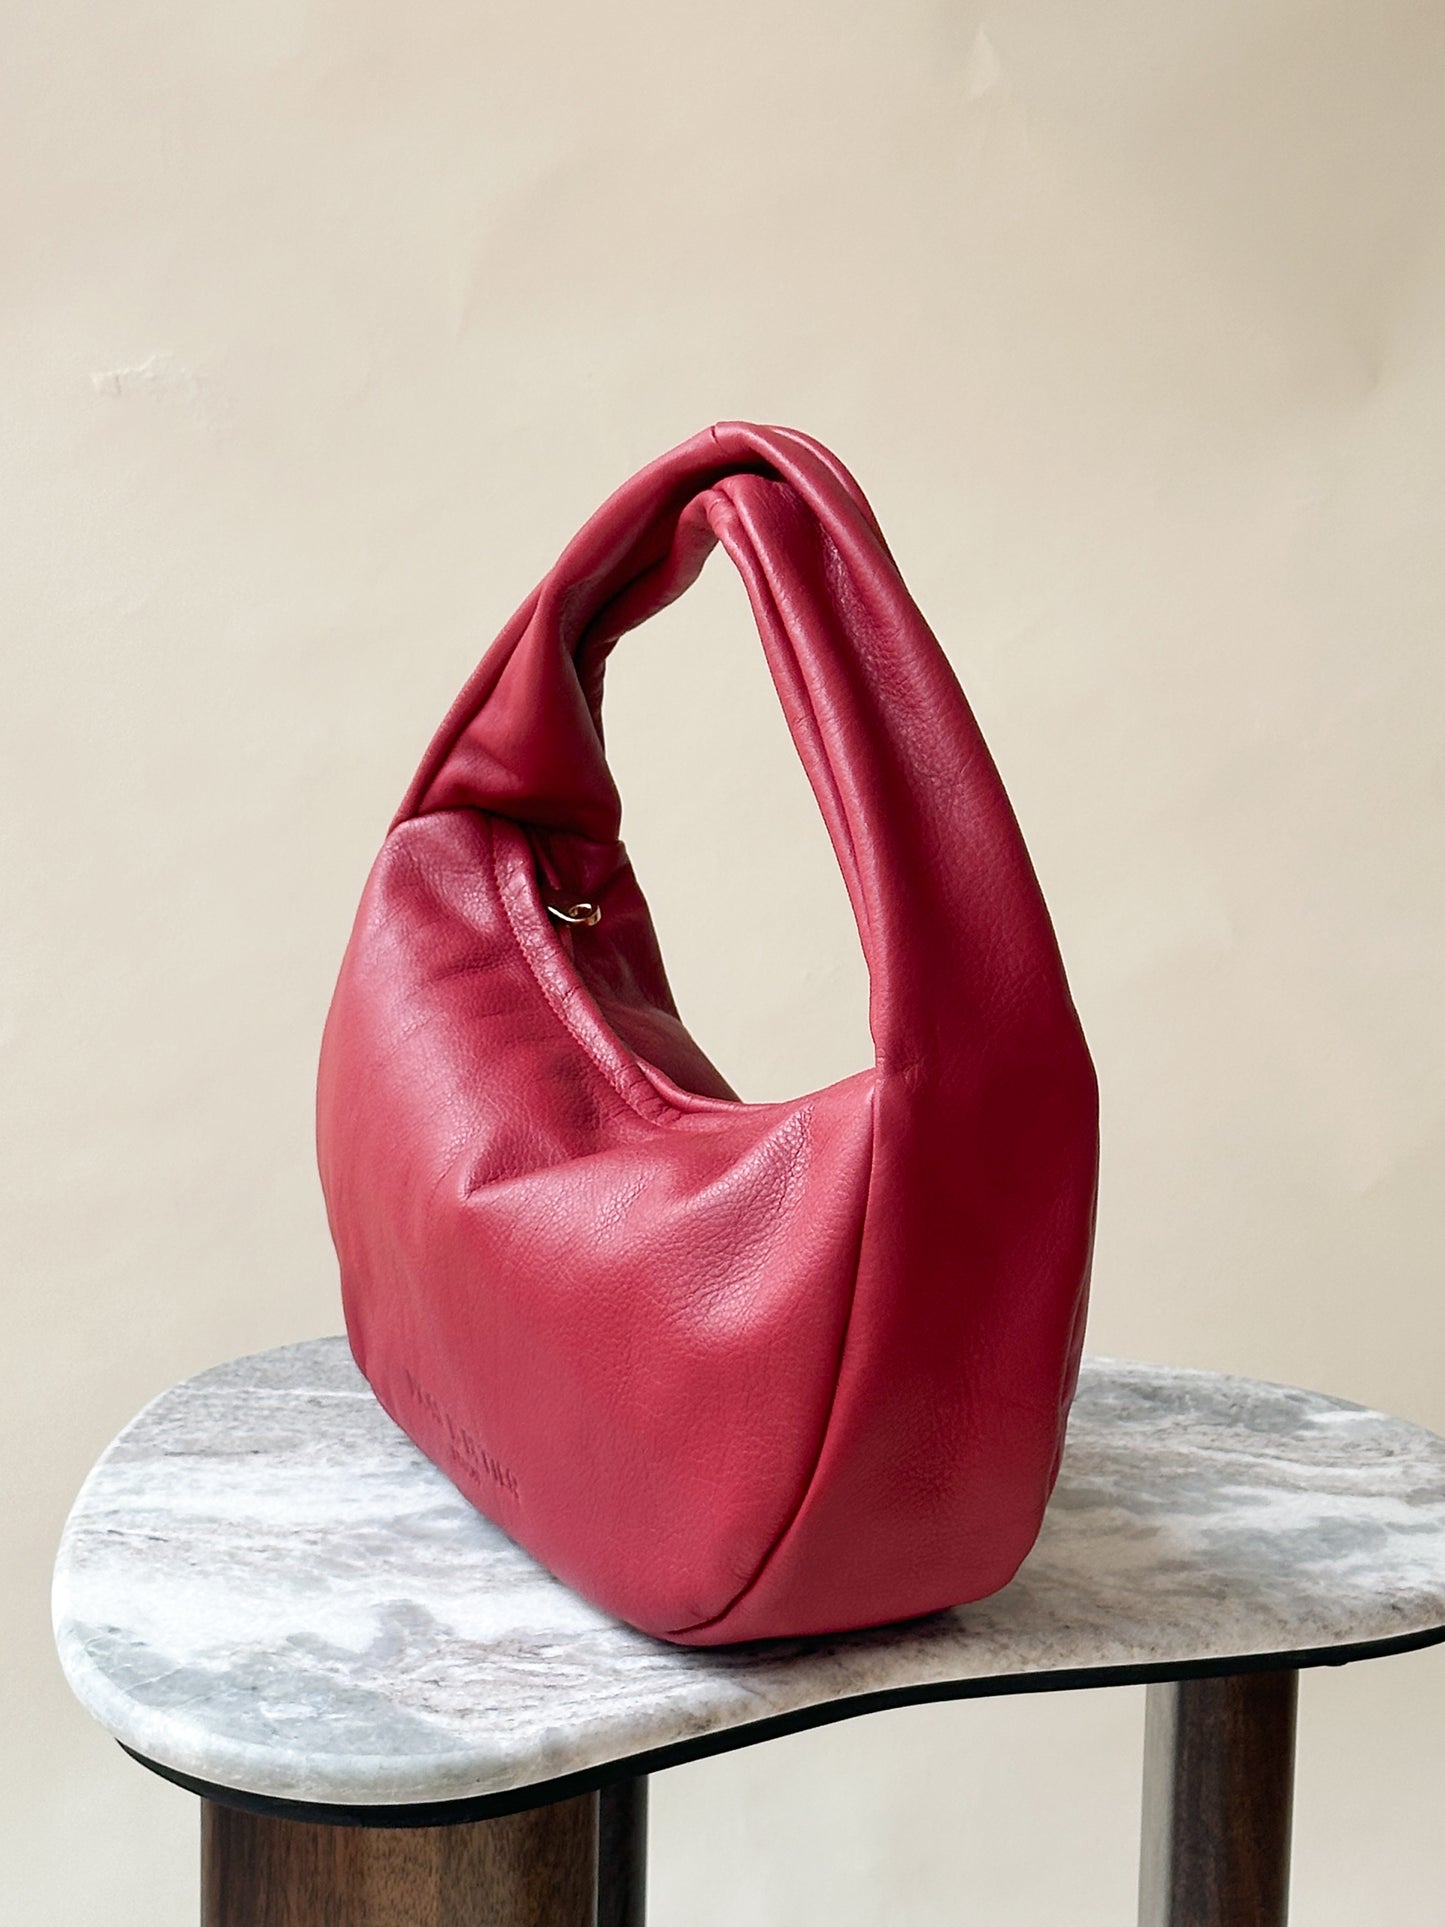 Twist bag in cherry